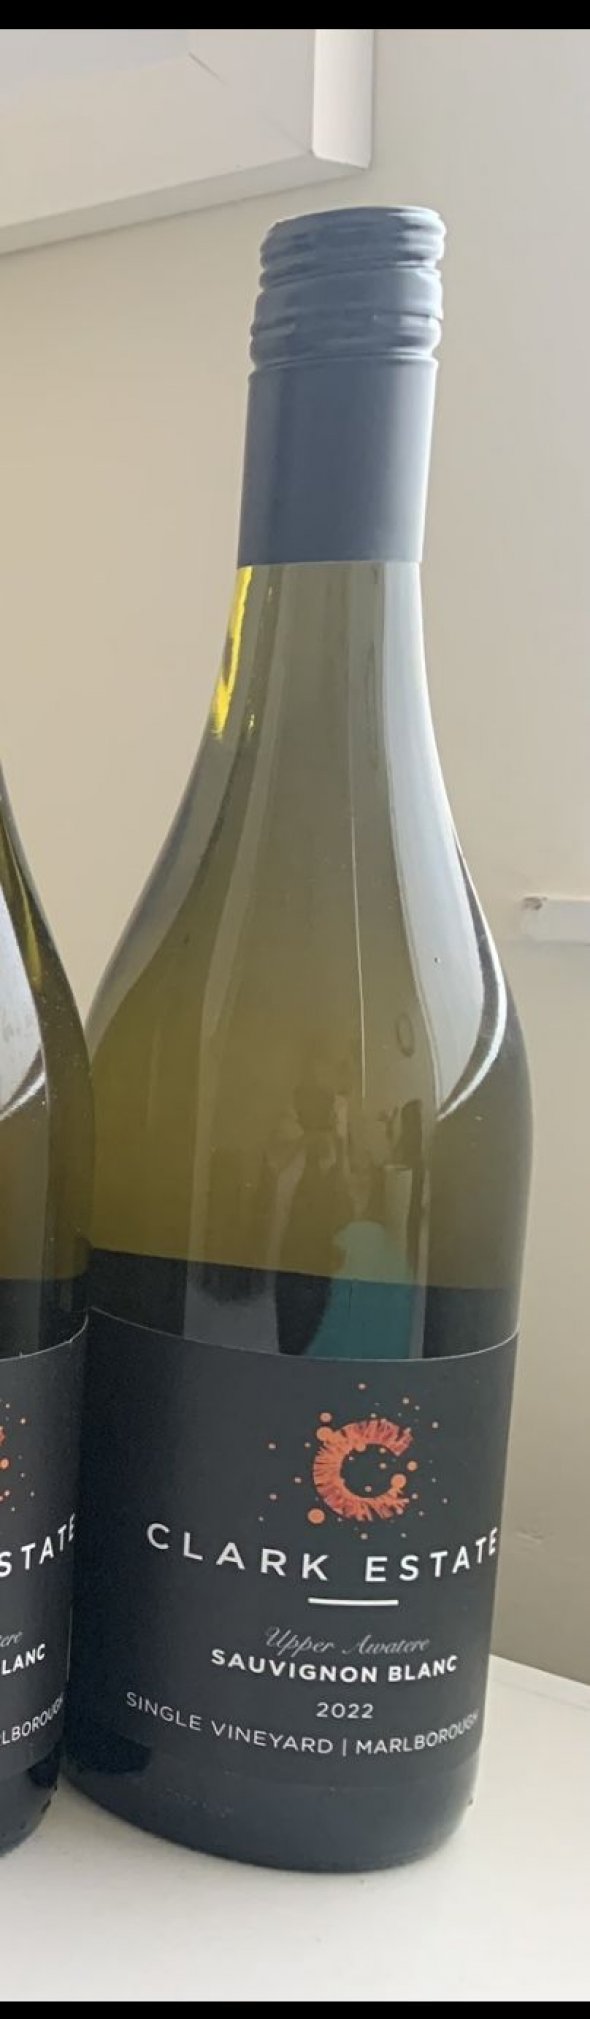 Sauvignon Balnc Clark Estate , Marlborough New Zealand, vintage 2022 - 12 Bottles 